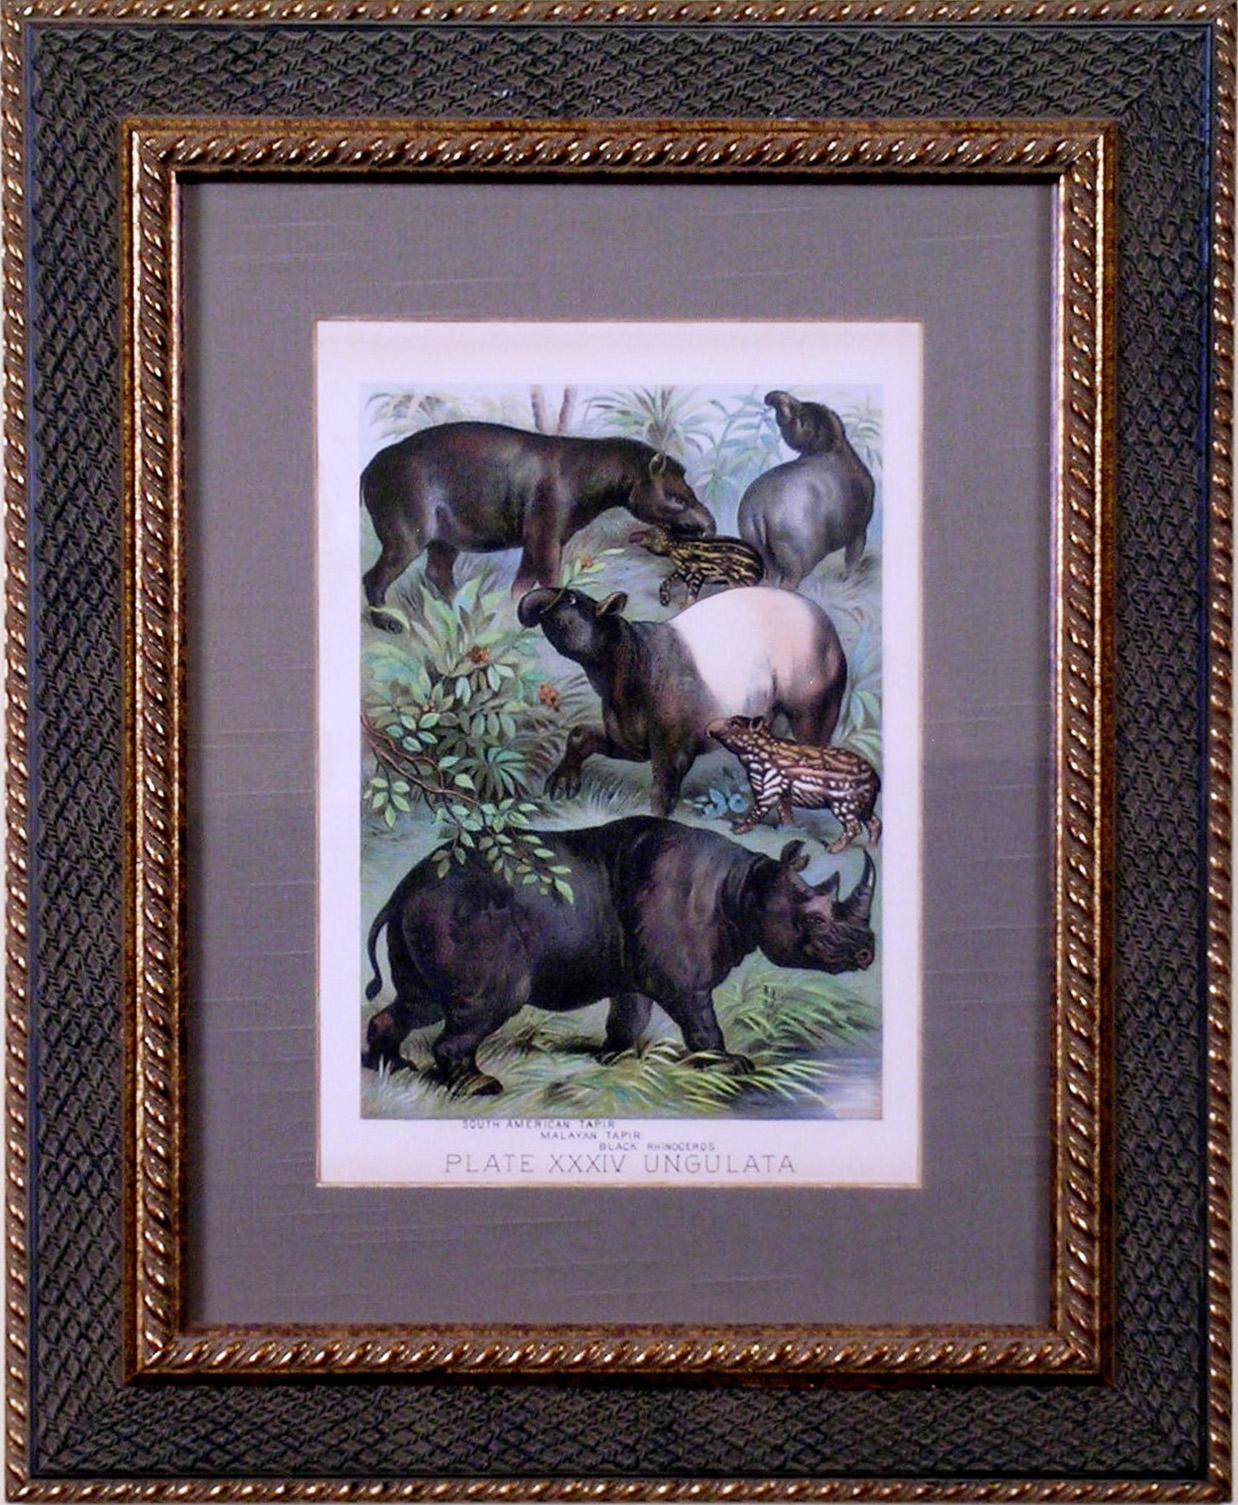 Plate XXXIV.  Ungulata.  South American Tapir, Malayan Tapir, Black Rhinoceros - Print by Henry J. Johnson